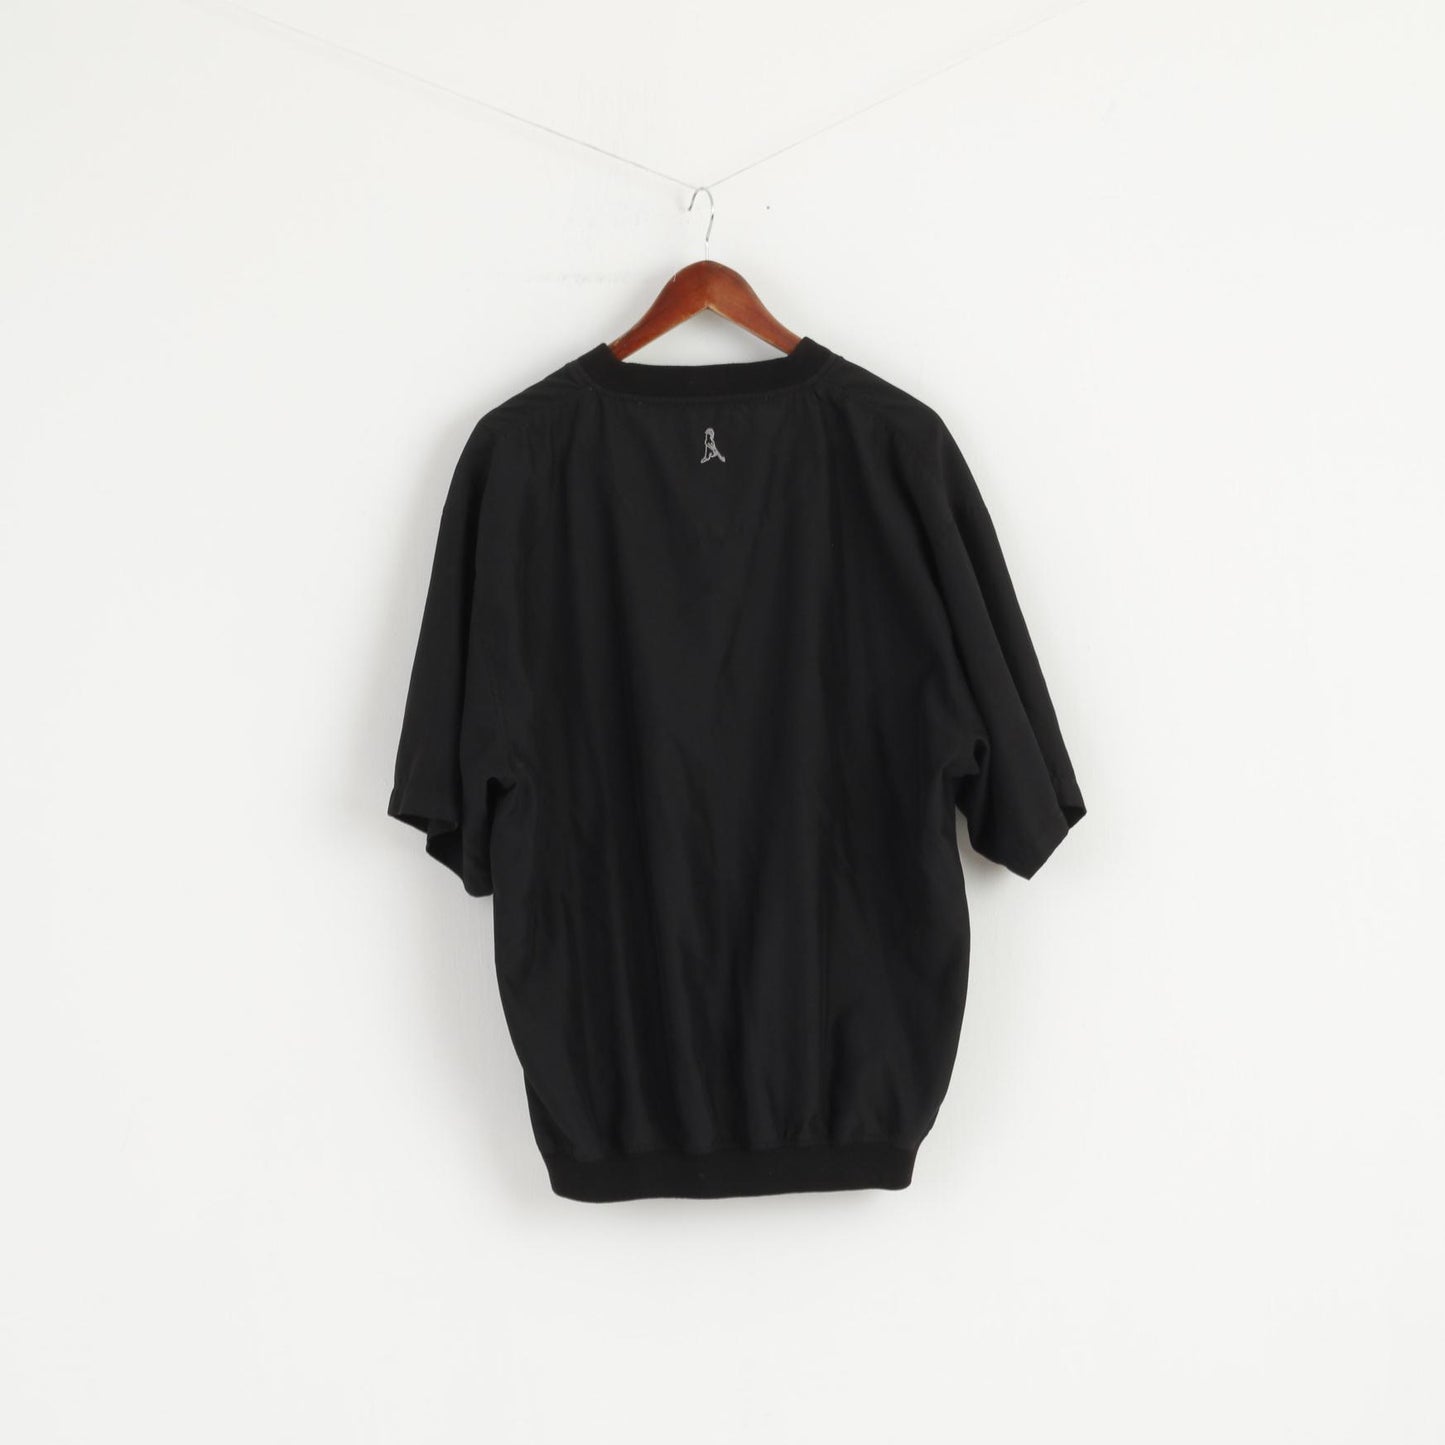 Ping Men L Shirt Black Golf Classic V Neck Short Sleeve Activewear Top